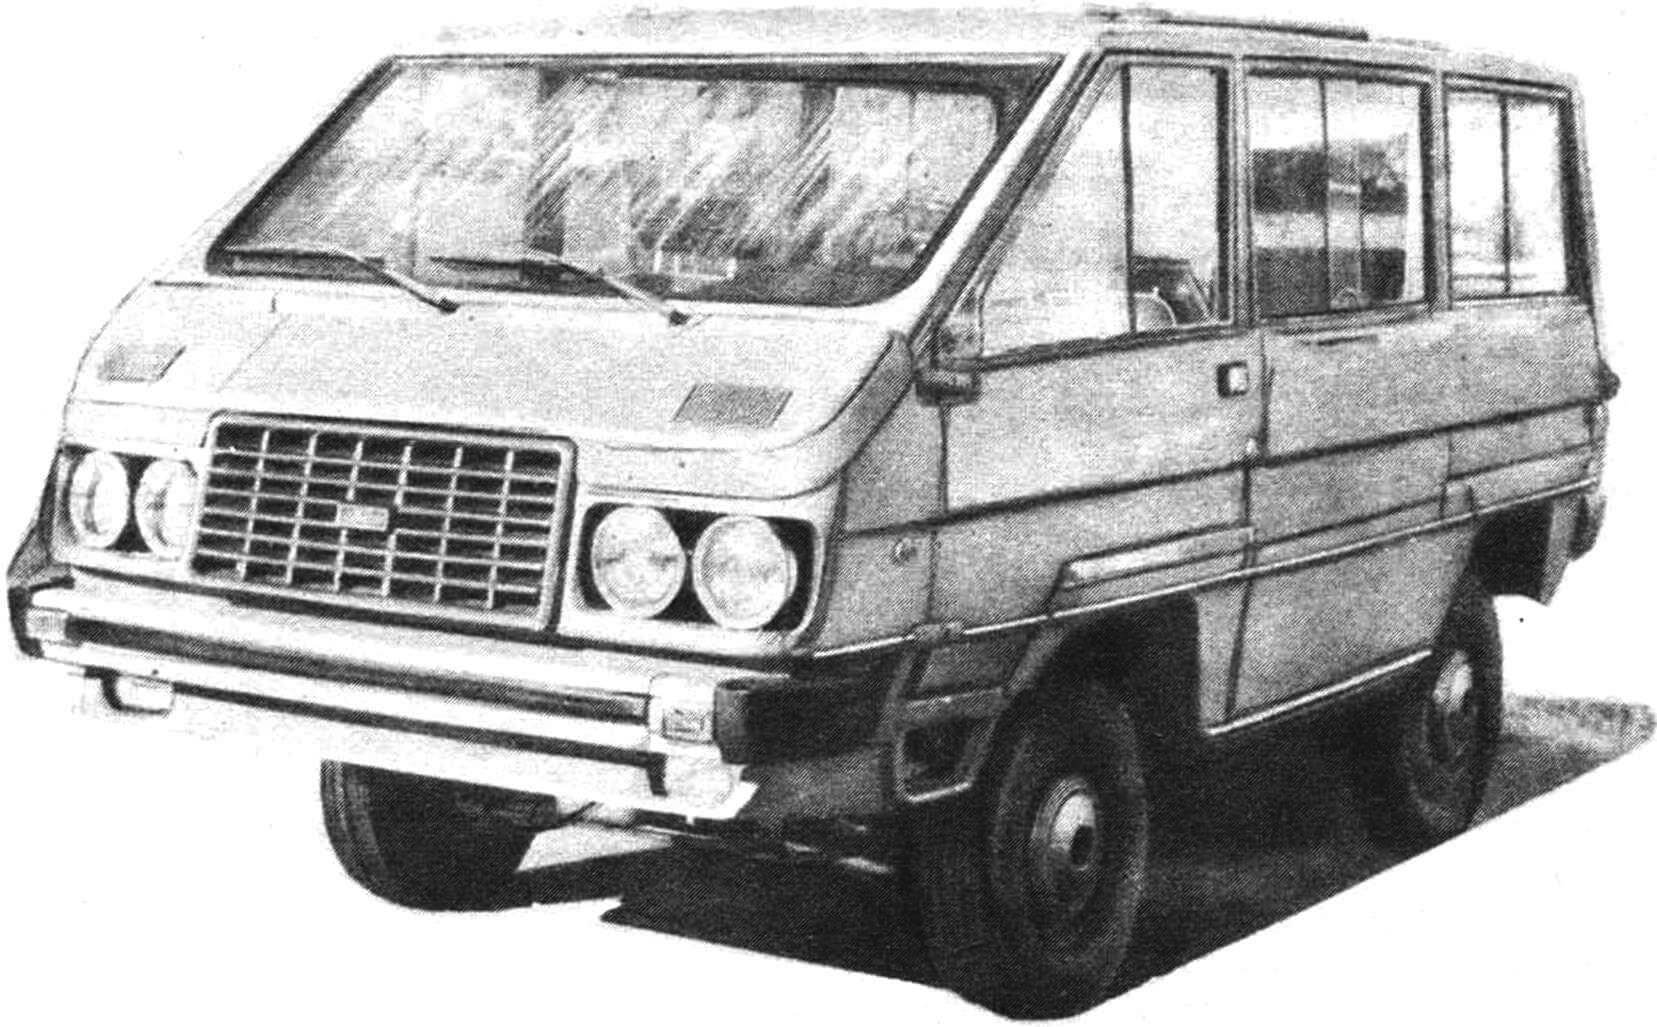 Sergey Bolshakov's first homemade car. Photo from 1983.